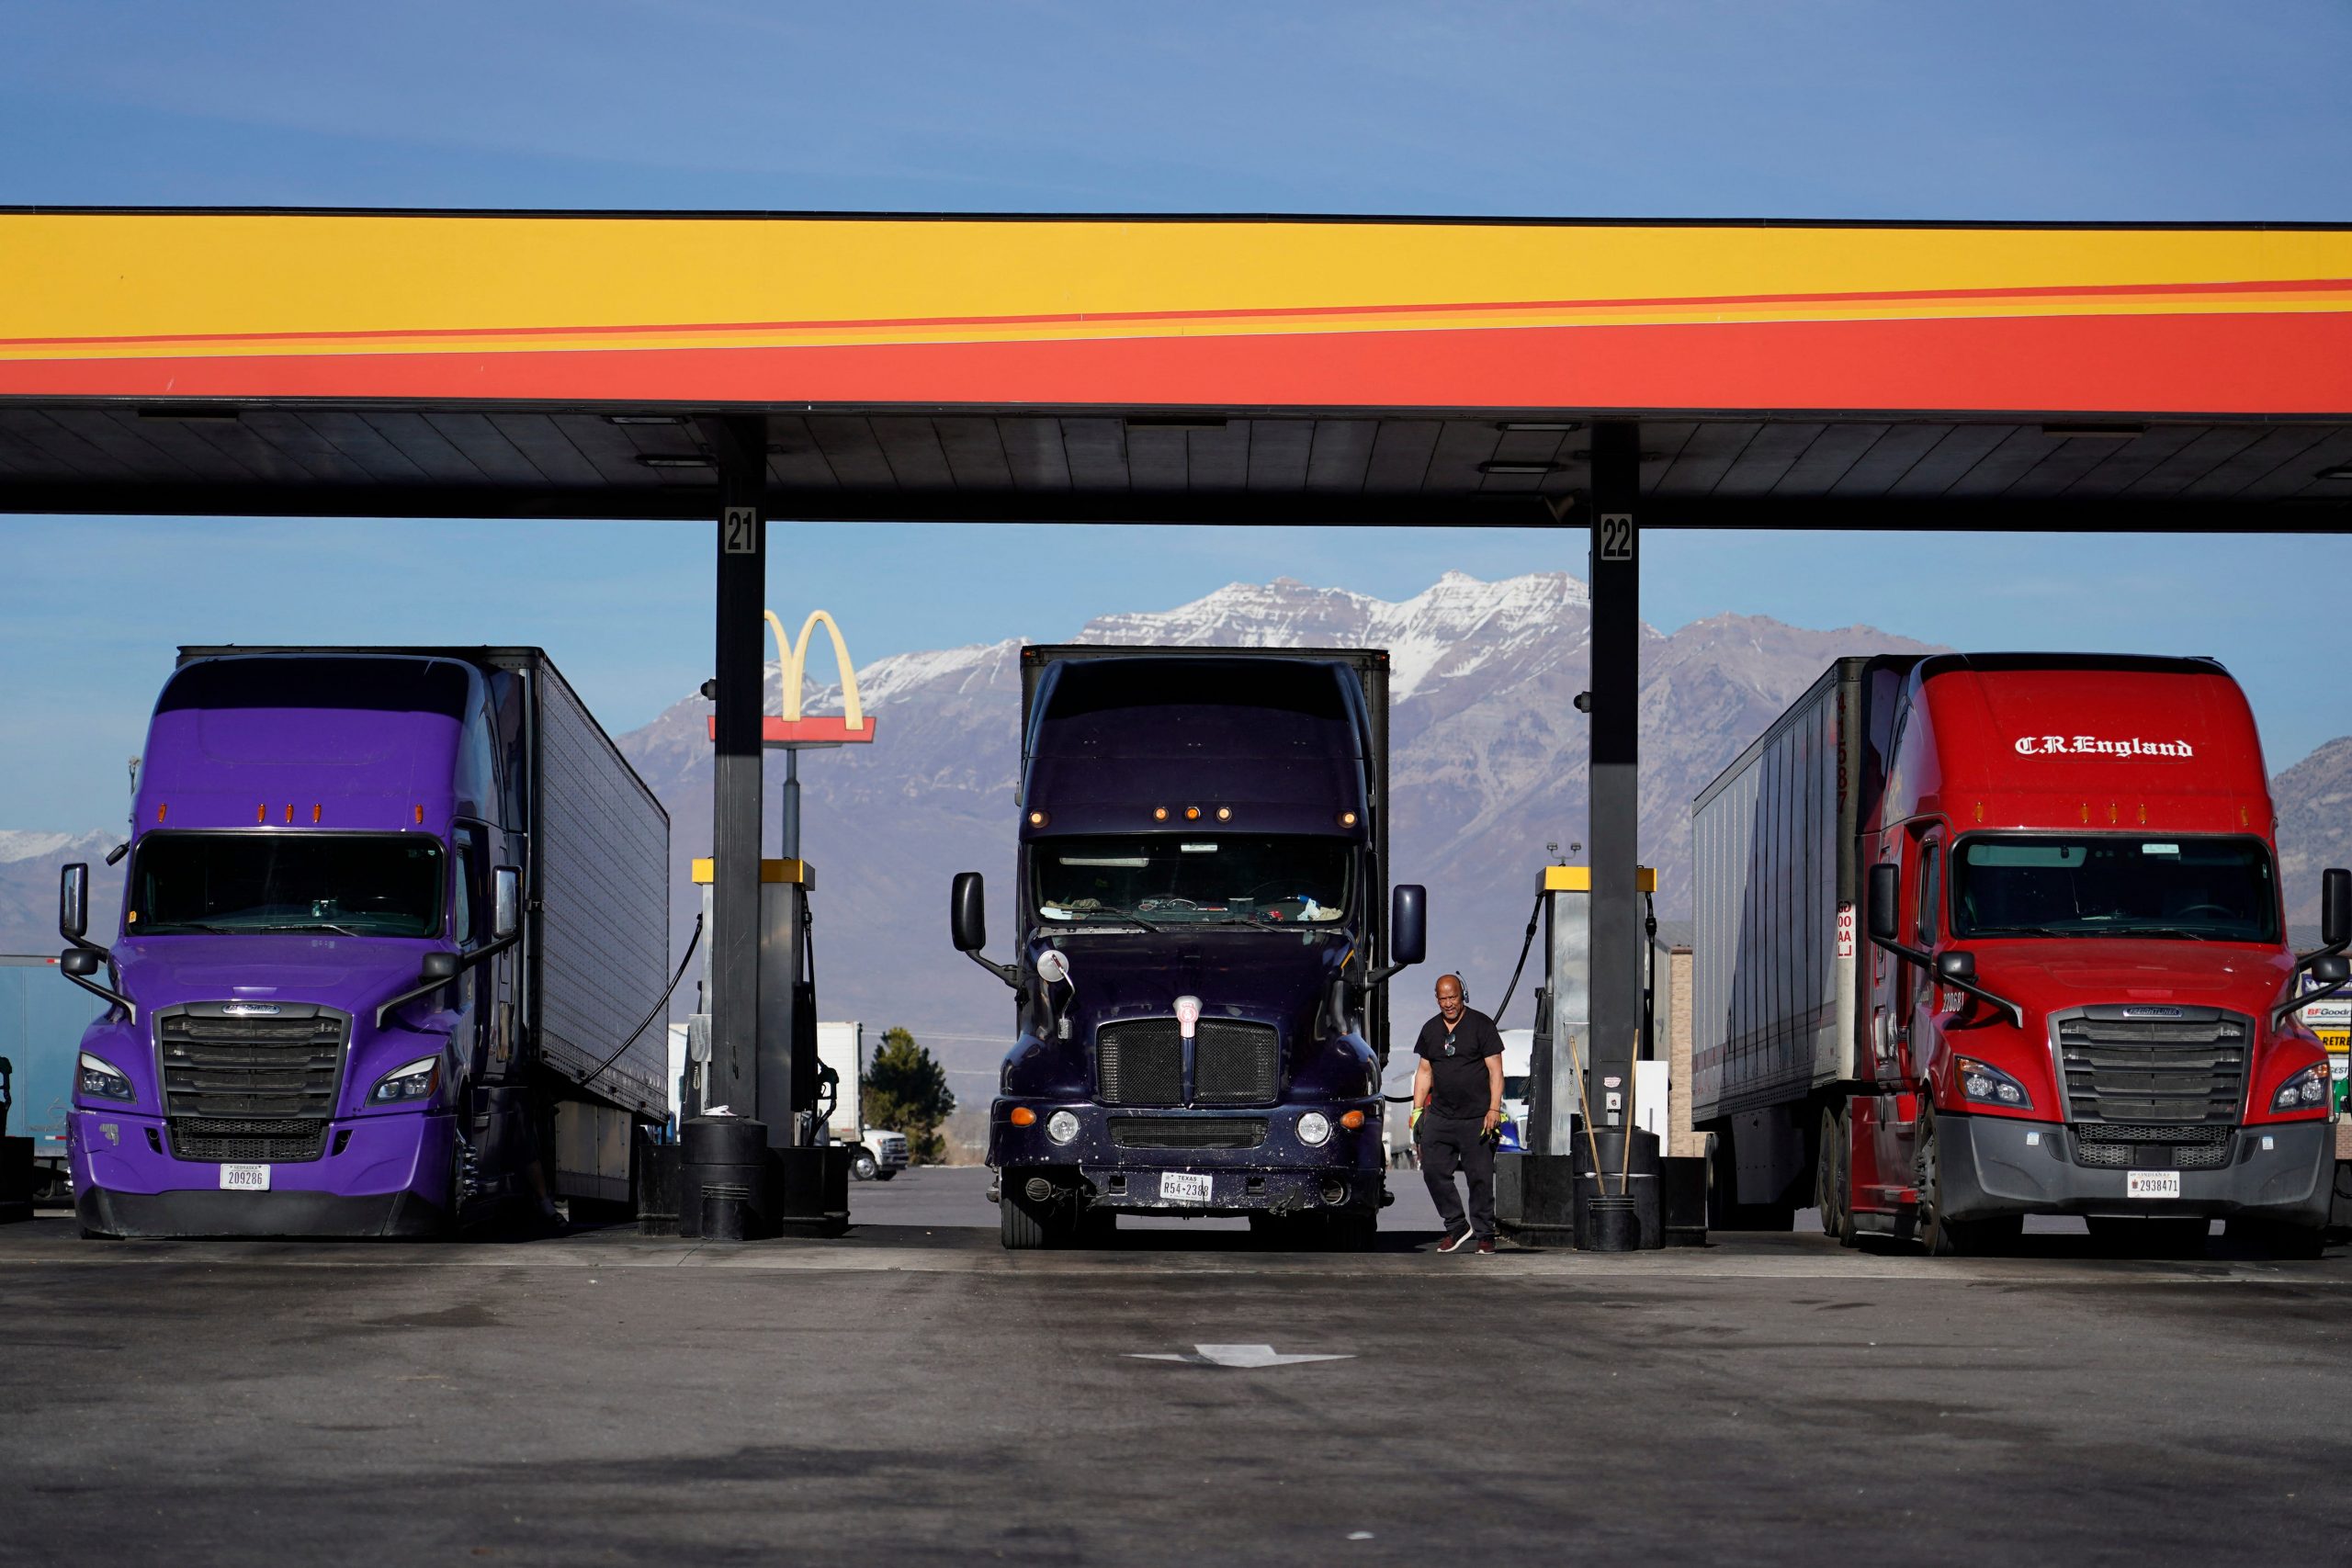 Trucks fuel up at the Love's Truck Stop in Springville, Utah, on December 1, 2021.